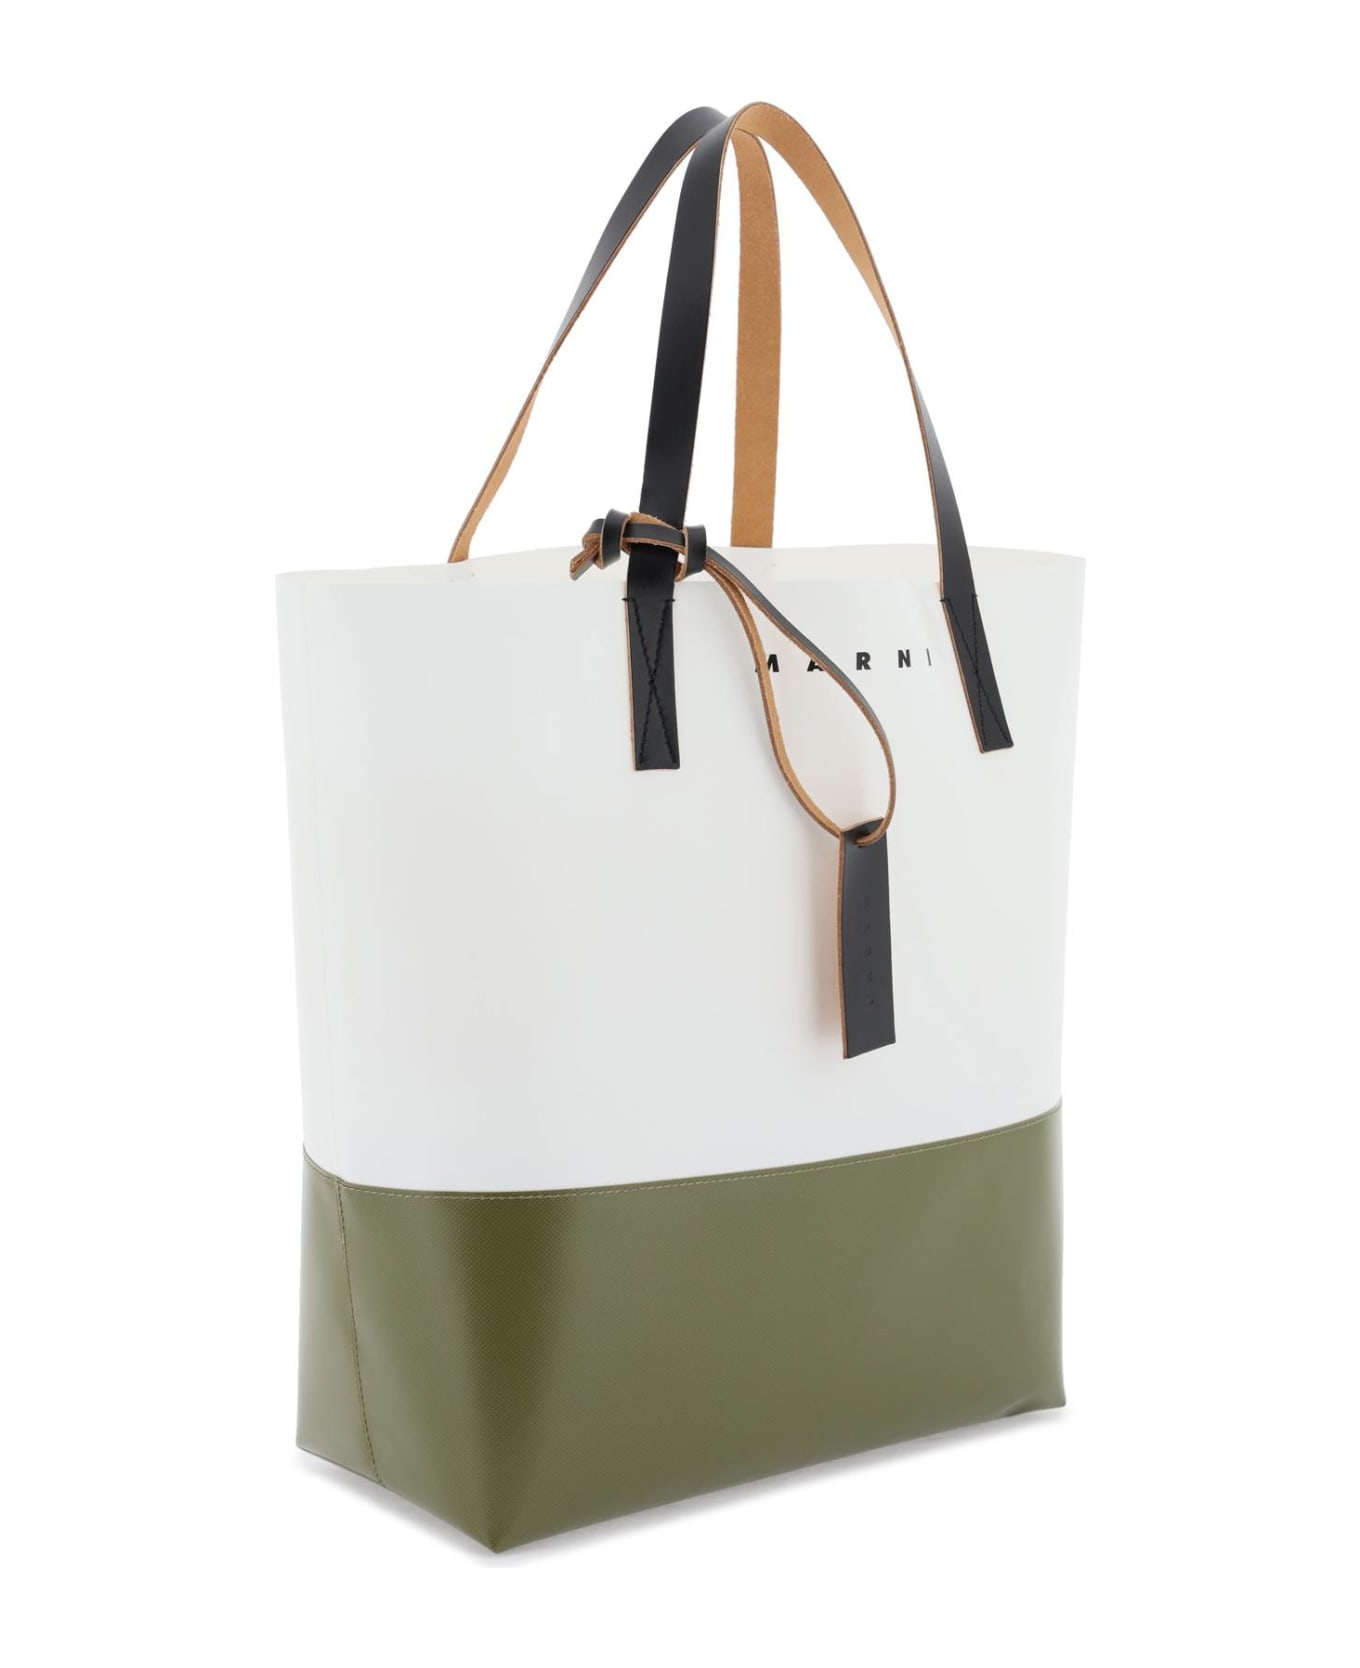 Marni Tribeca Tote Bag - LILY WHITE LEAV GREEN (Green) トートバッグ